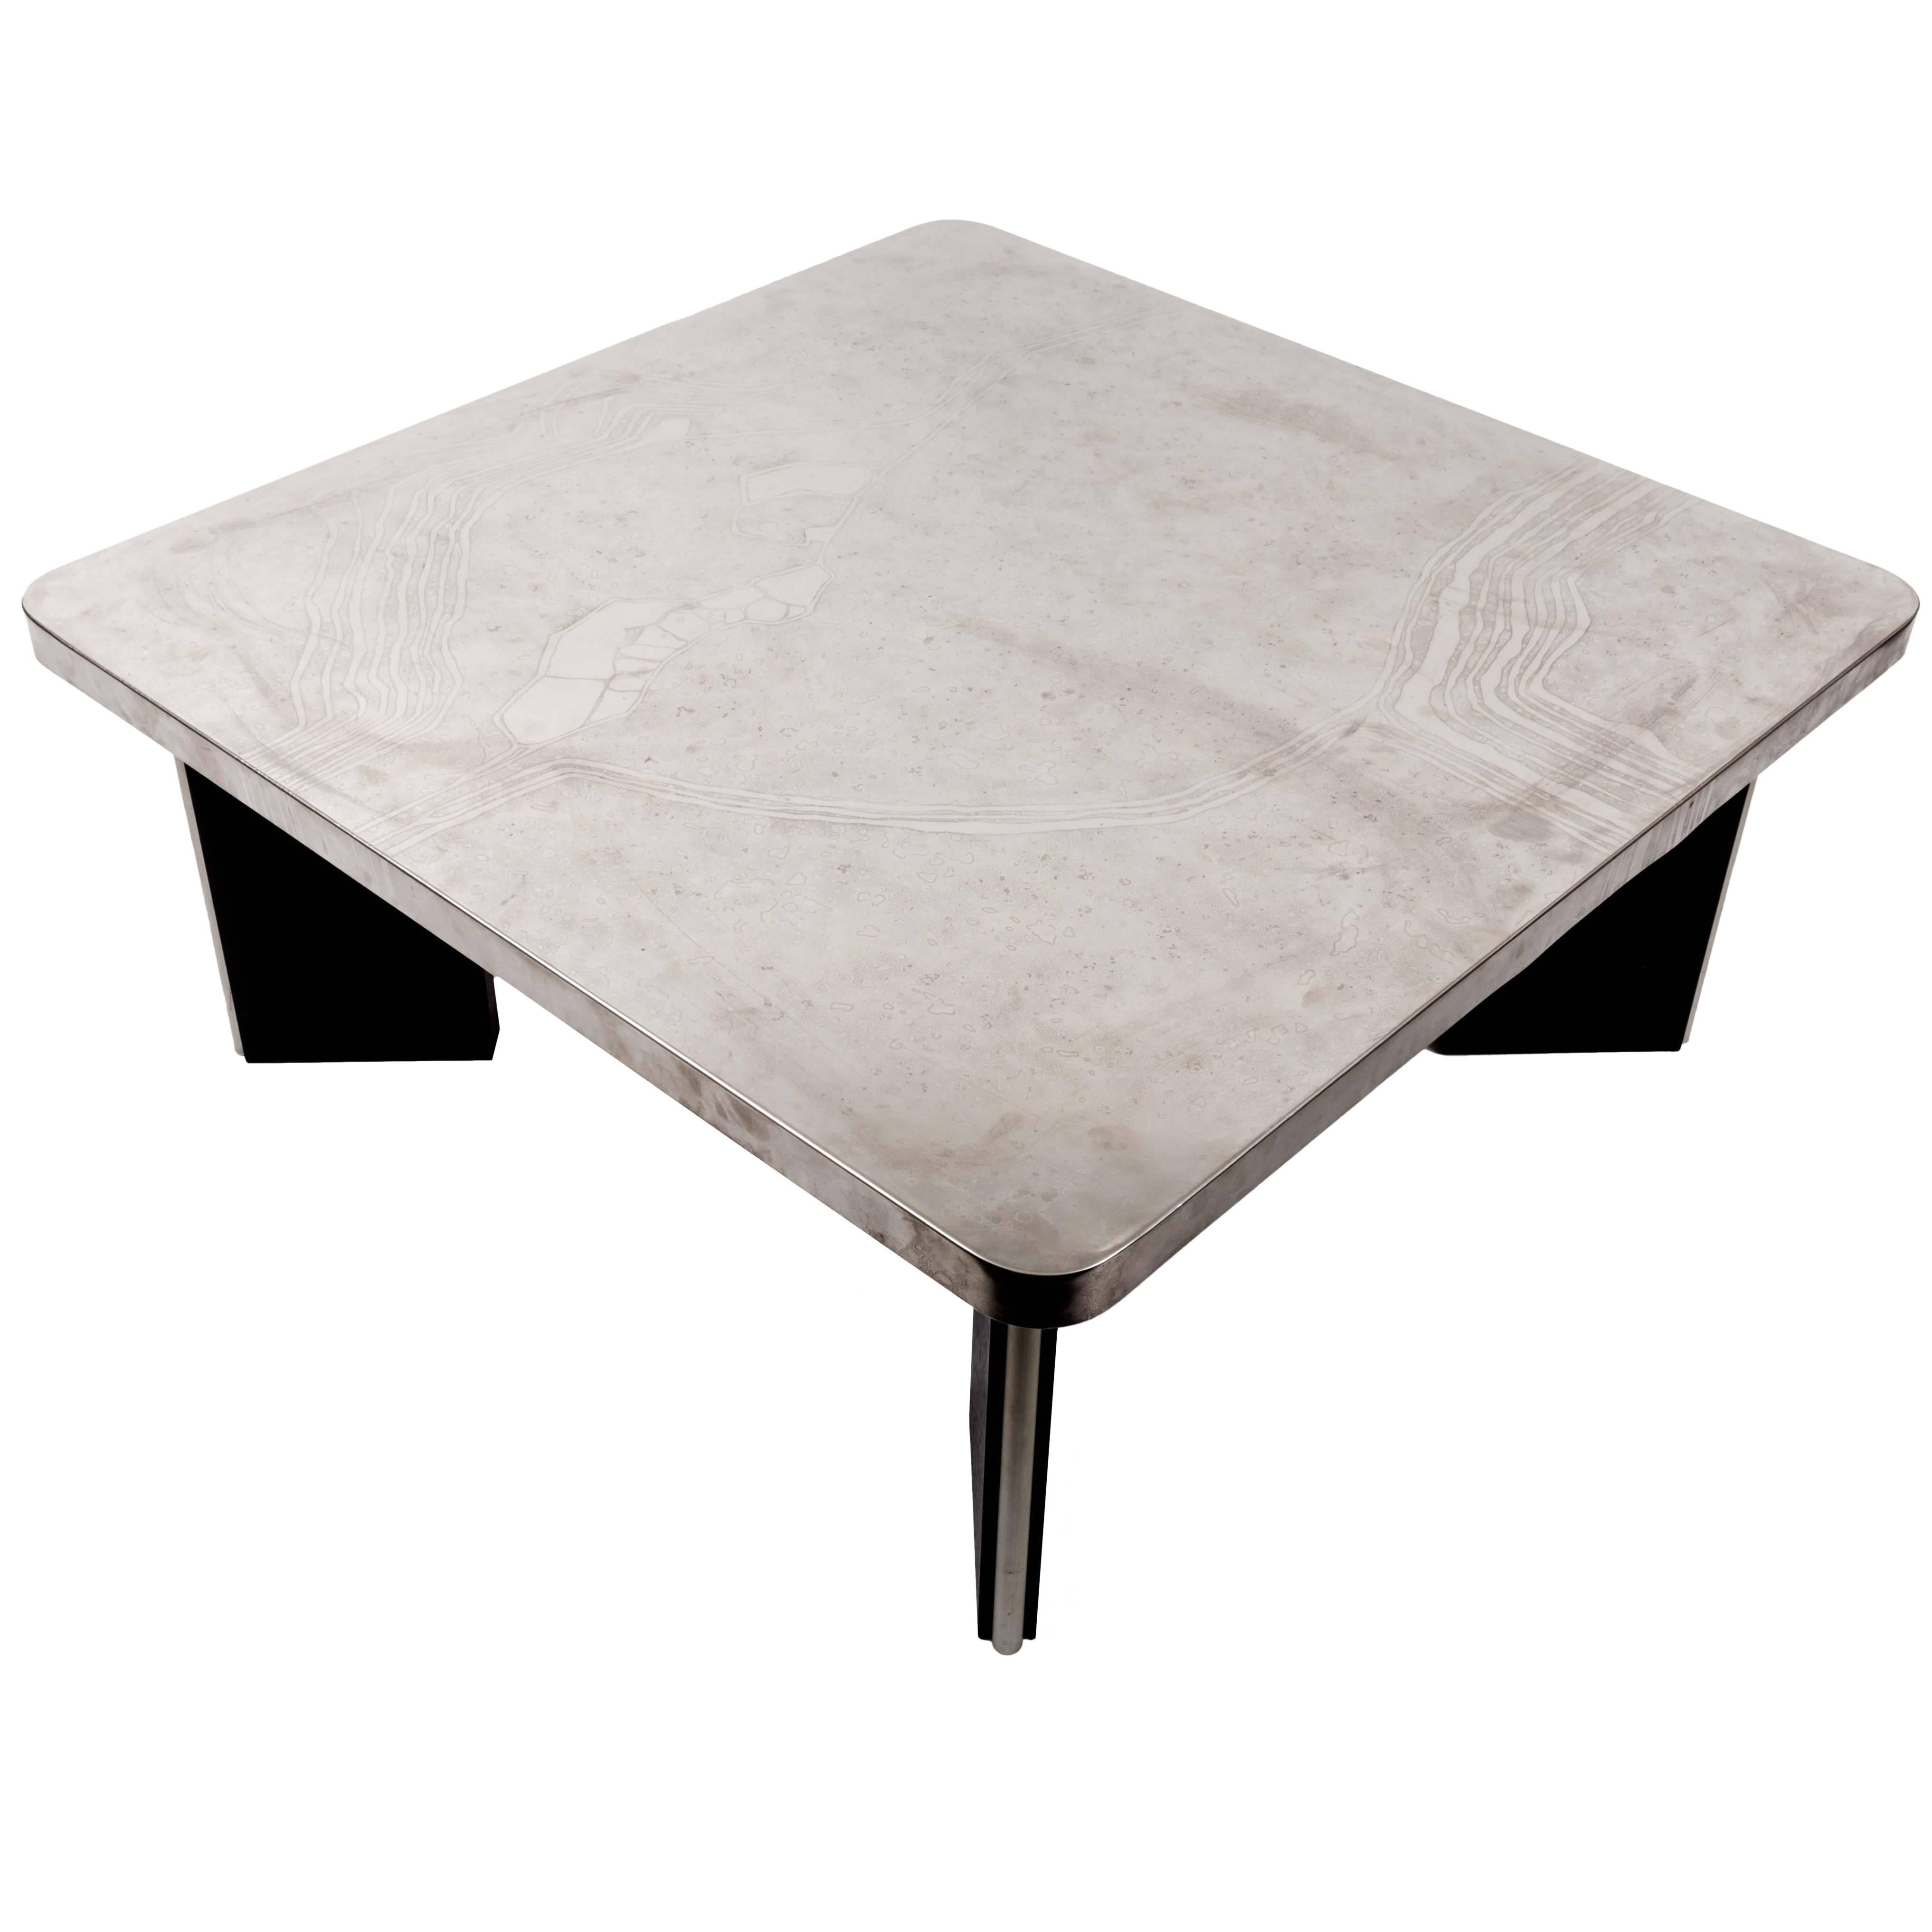 Modernist Aluminum Cocktail Table with Etched Design, on Black Wooden Base